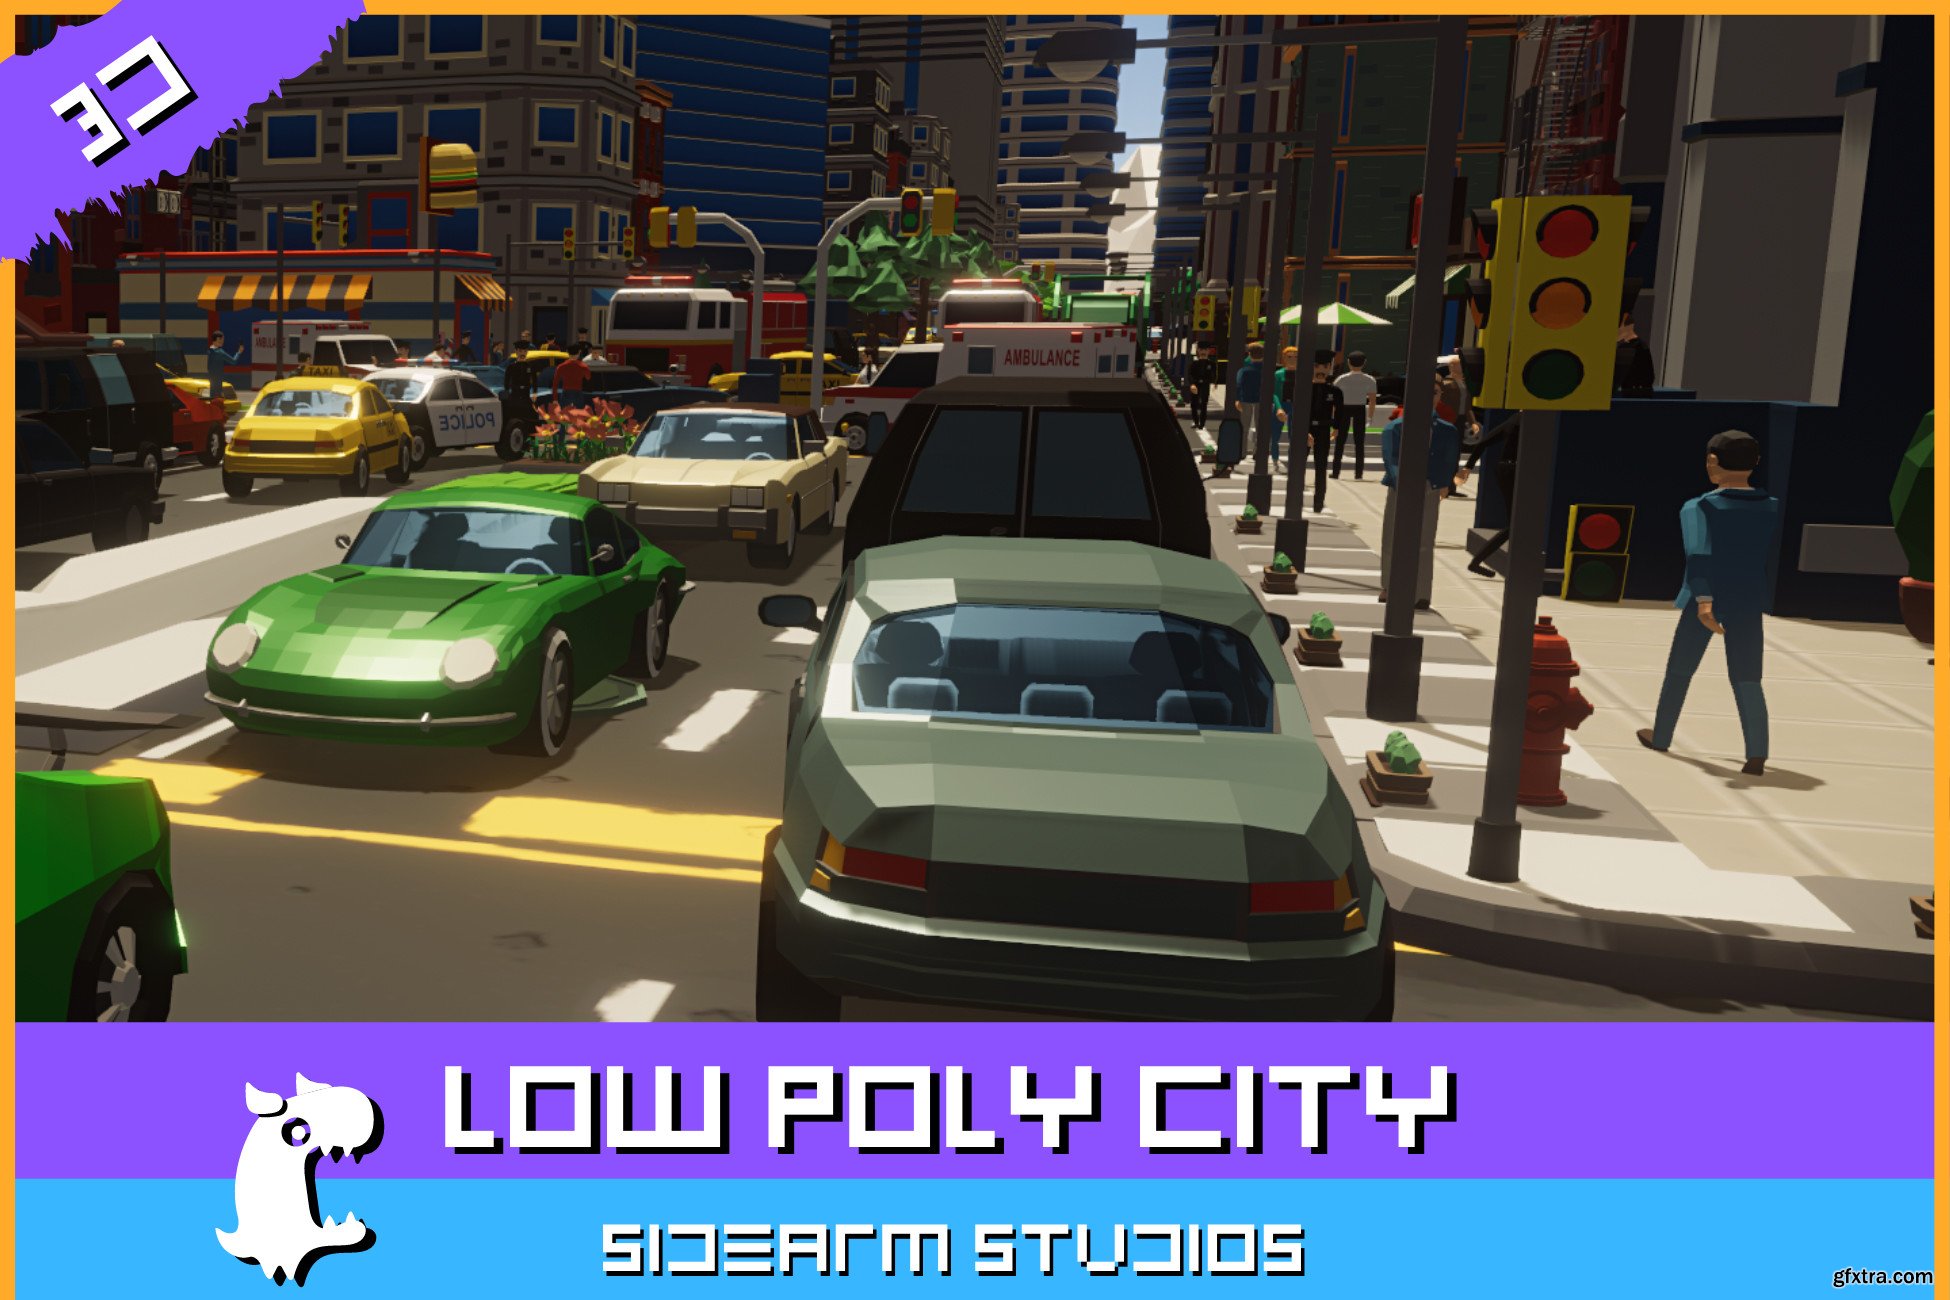 Unity LOW POLY City Pack v0.8 » GFxtra